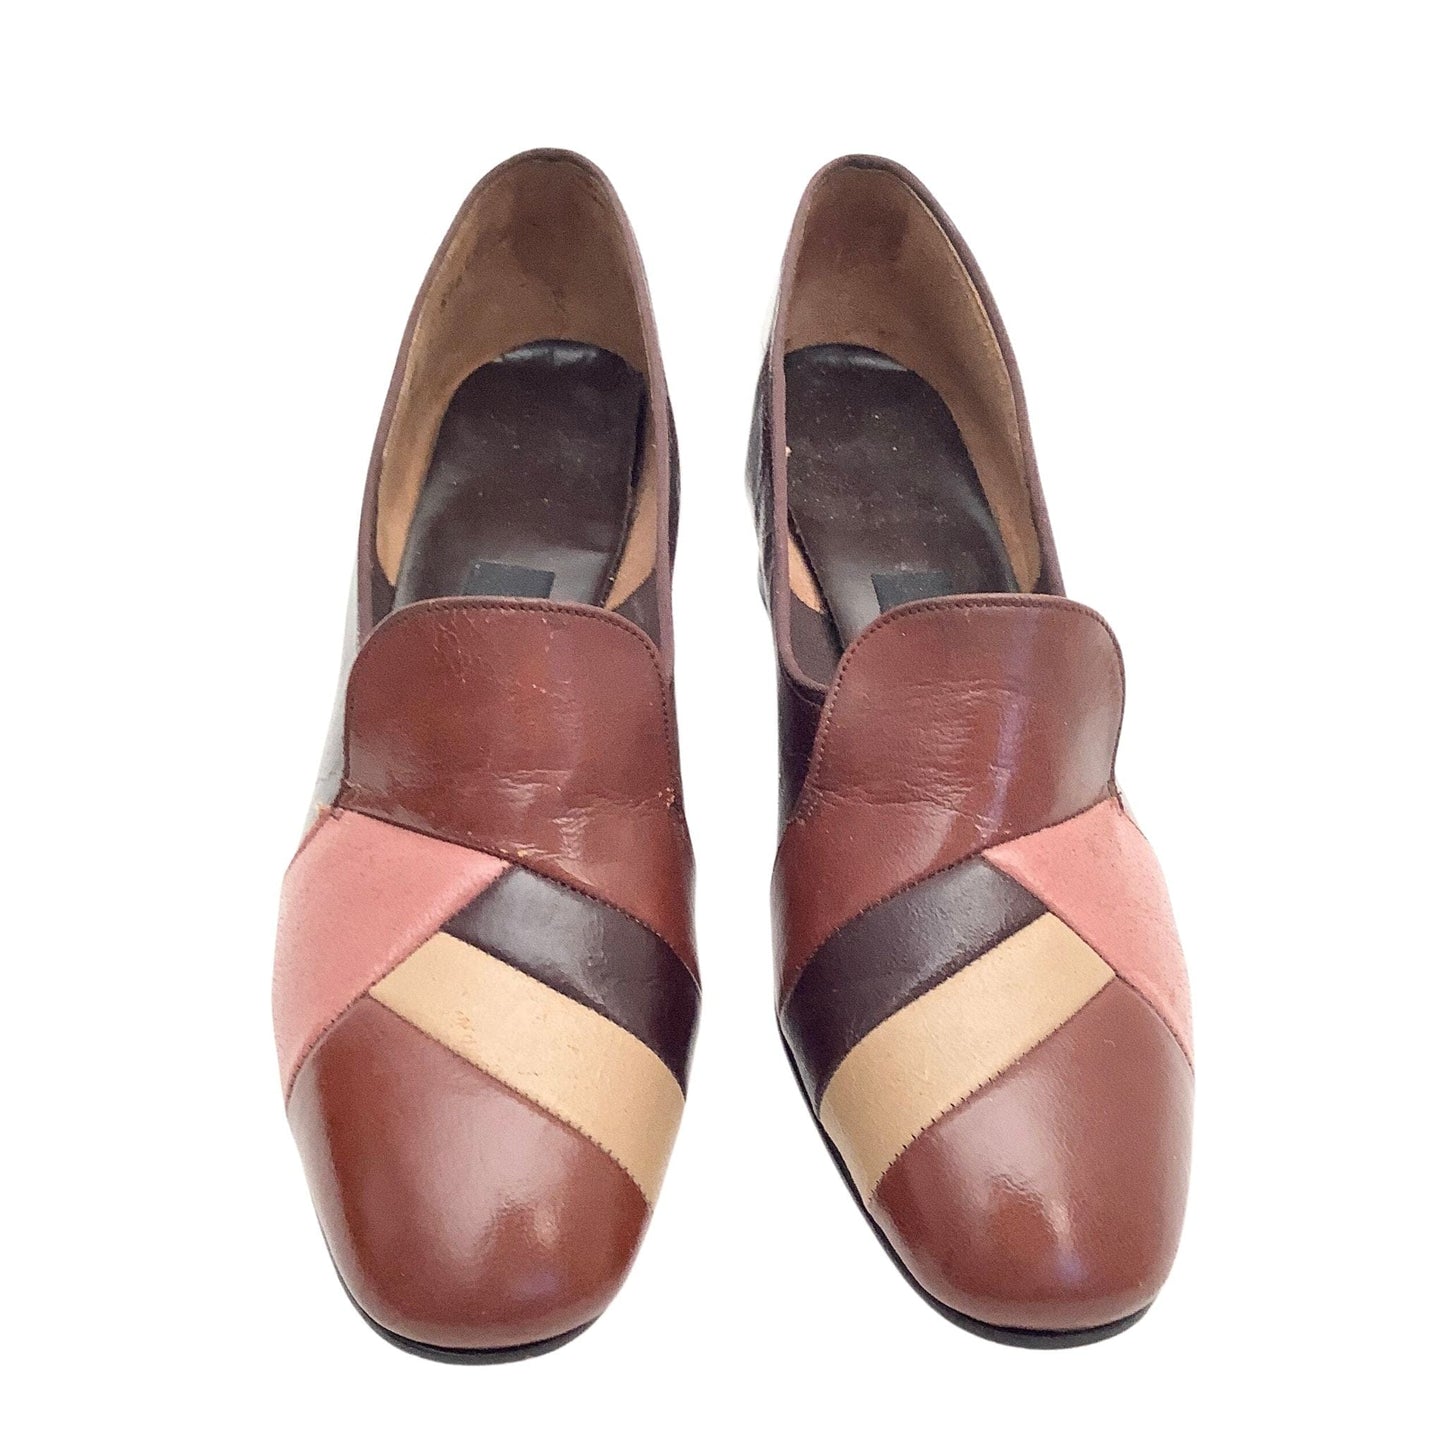 1960s Color Block Heels 6 / Multi / Vintage 1960s